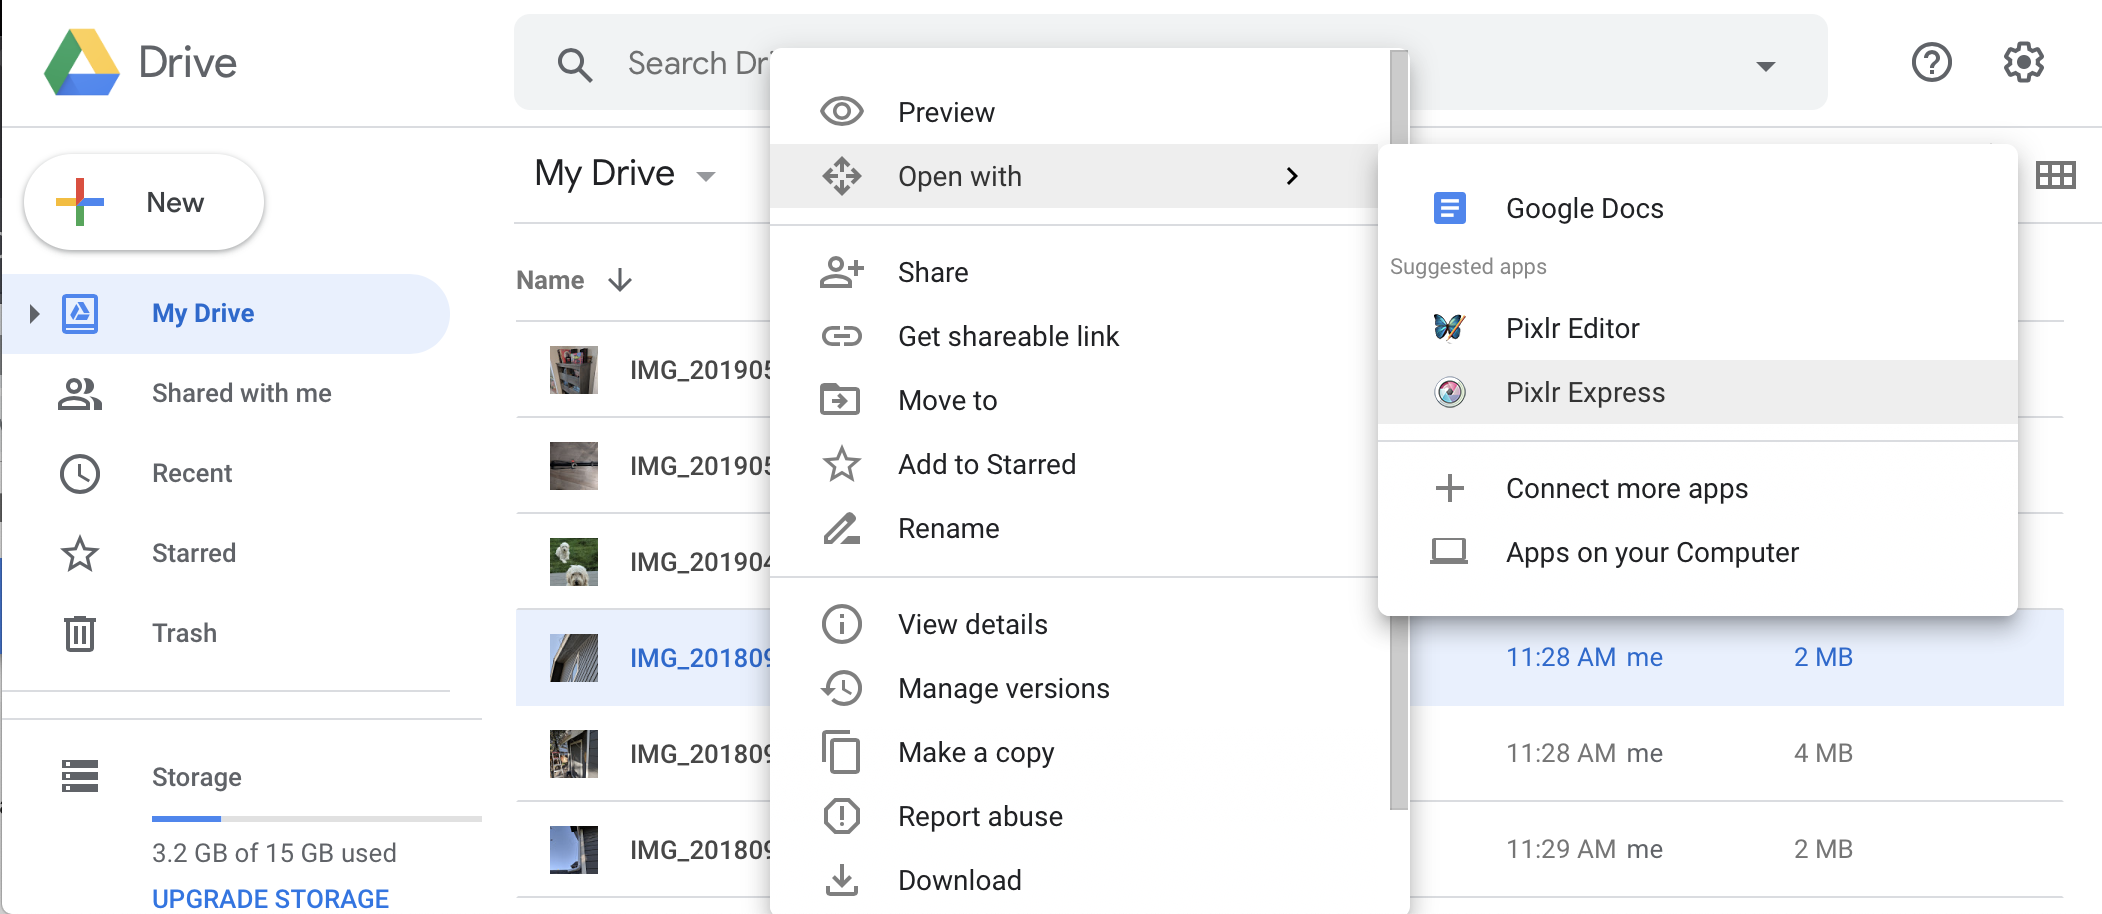 UI Google Drive terbuka dengan item menu